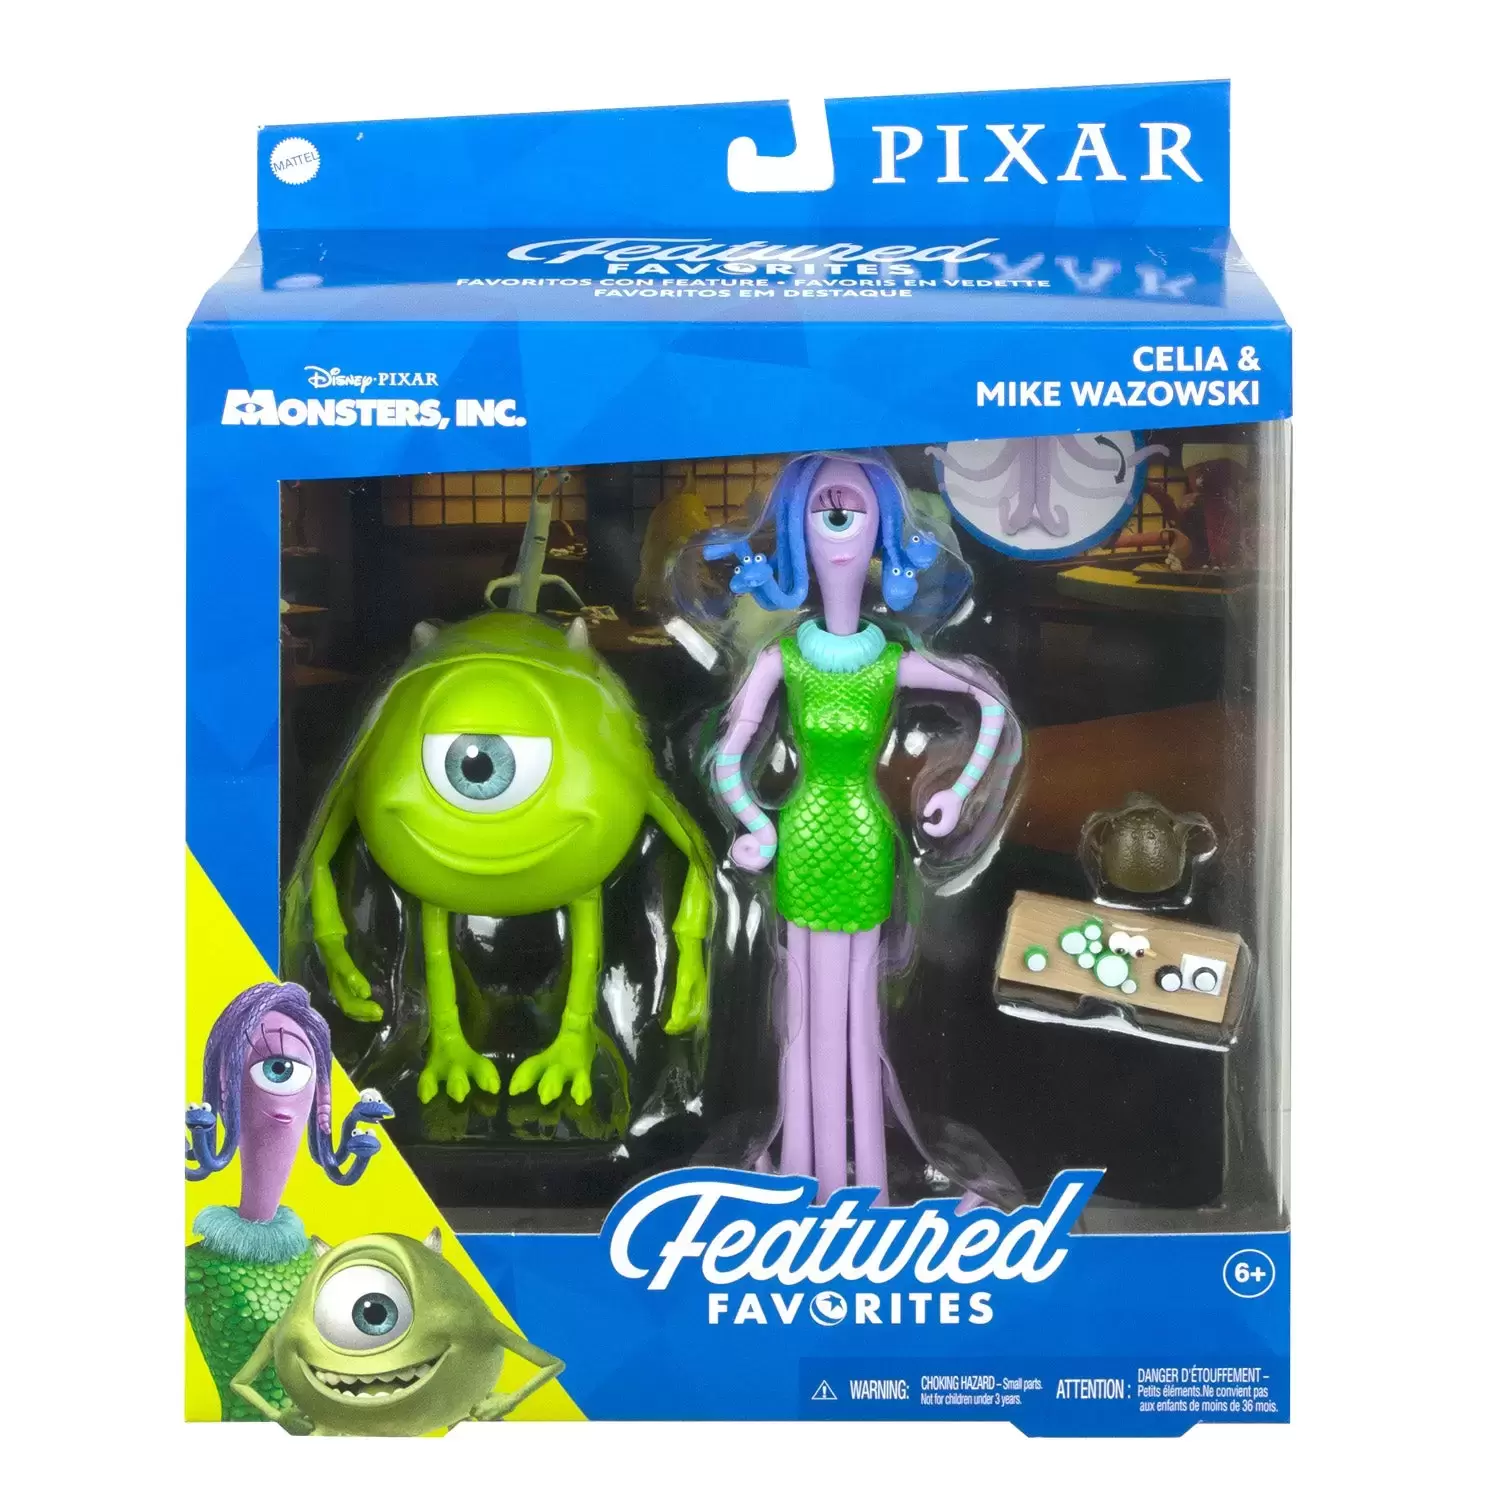 Pixar - Featured Favorites - Celia Mae & Mike Wazowski